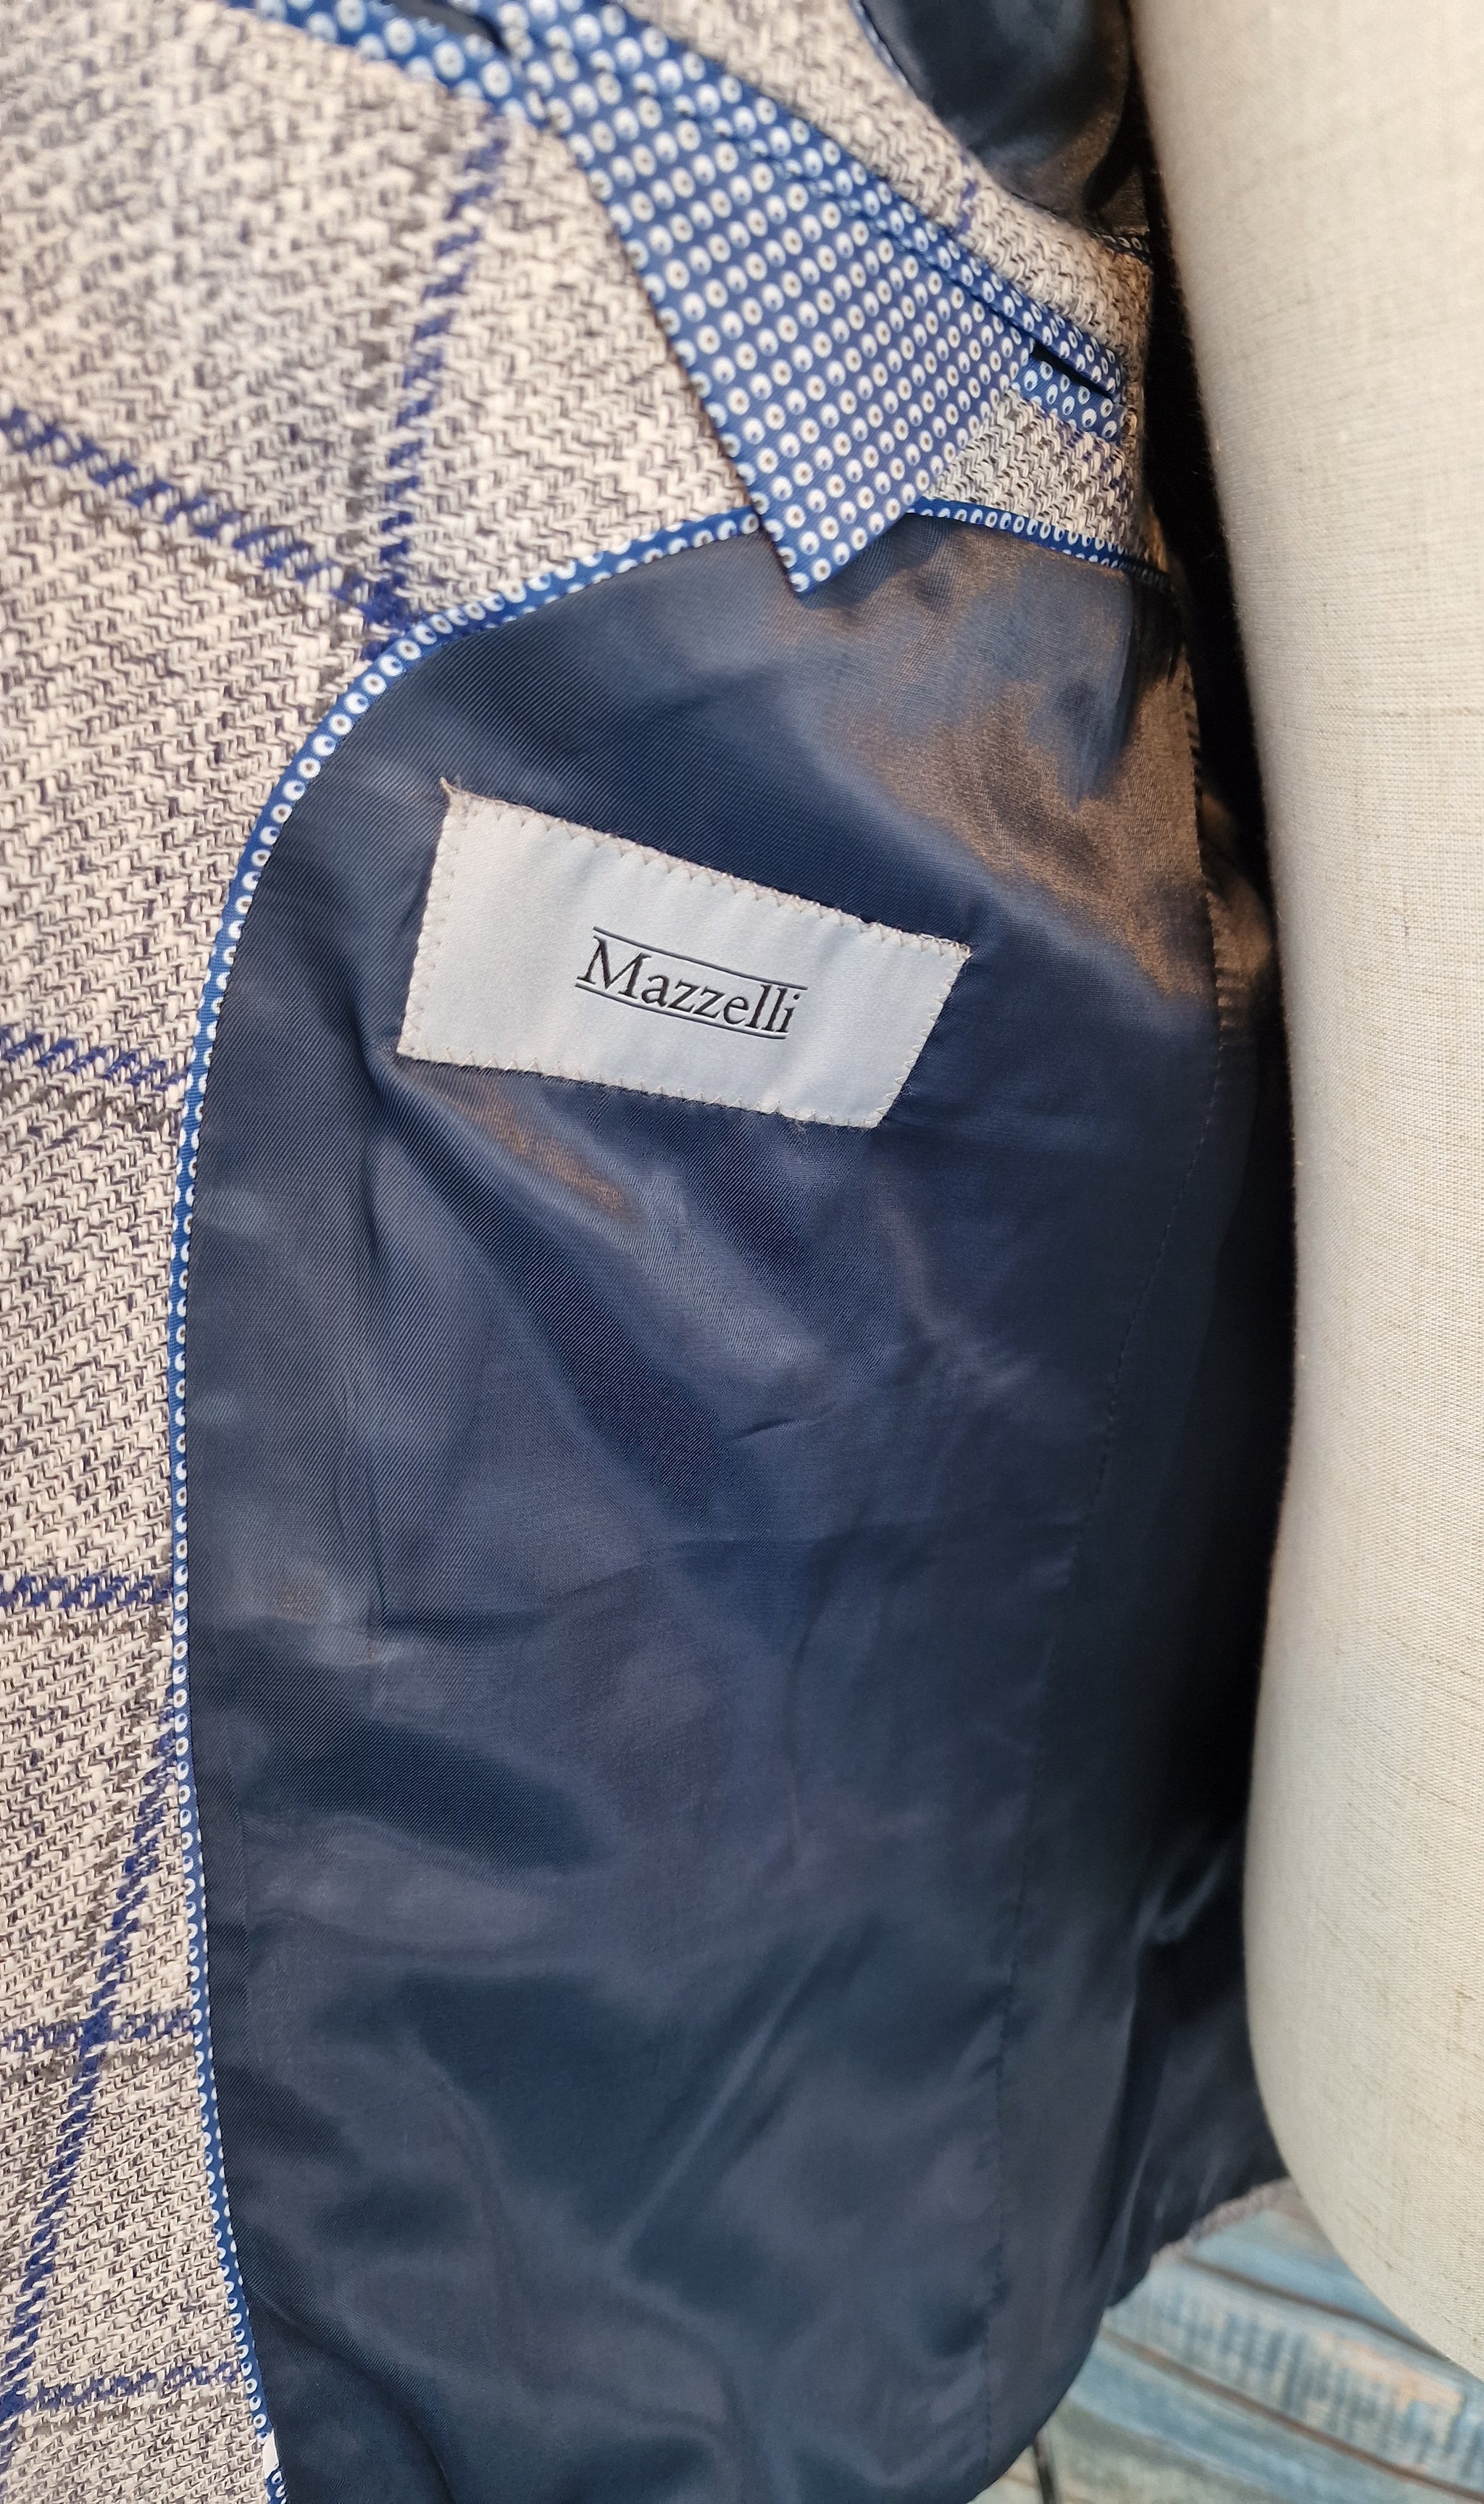 Mazzelli "Solbiati" Check Cotton, Linen and Wool Jacket